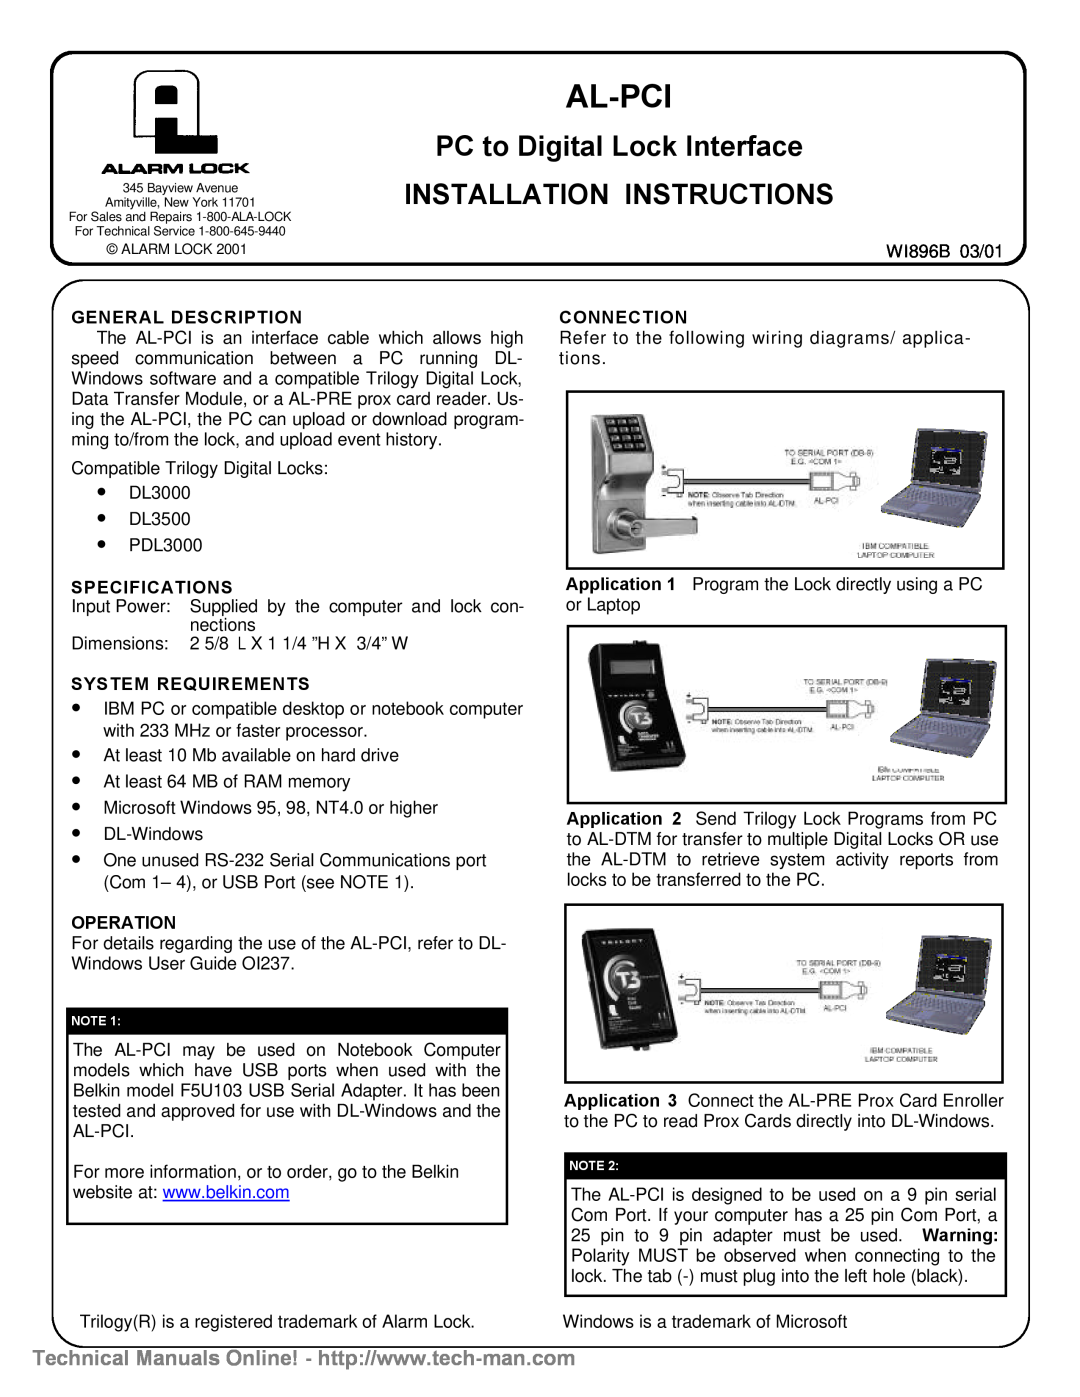 Belkin W1896B 03/01 technical manual Al-Pci, PC to Digital Lock Interface INSTALLATION INSTRUCTIONS, General Description 